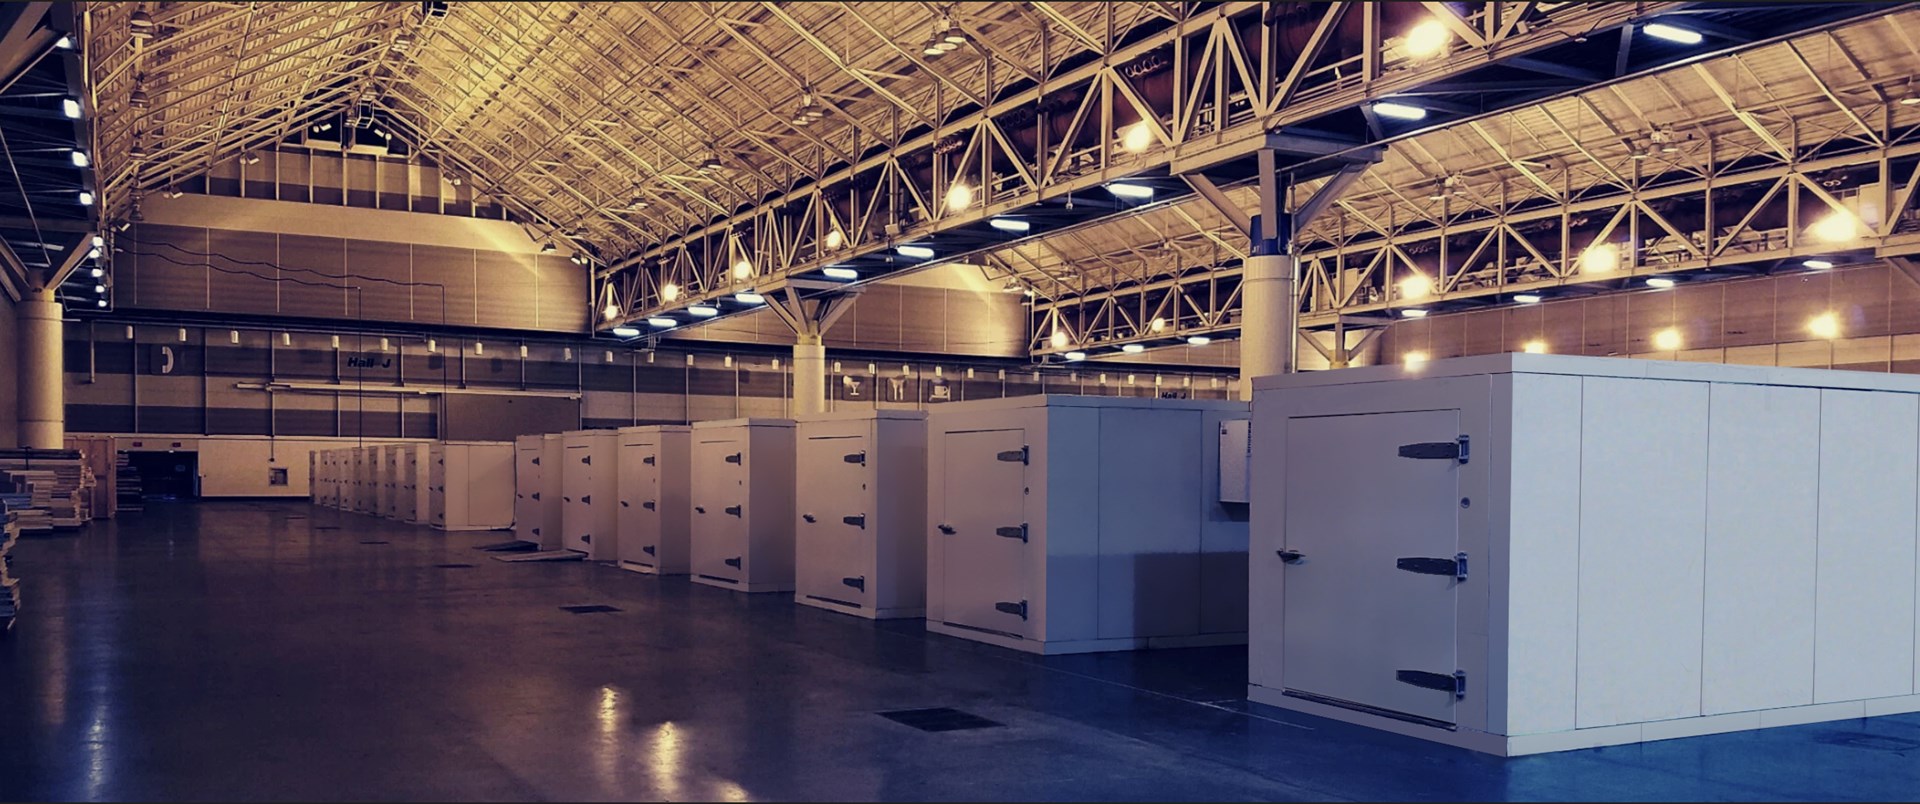 Commercial Refrigeration, Modular Temporary Kitchens, Storage Refrigeration & Modular Cold Rooms